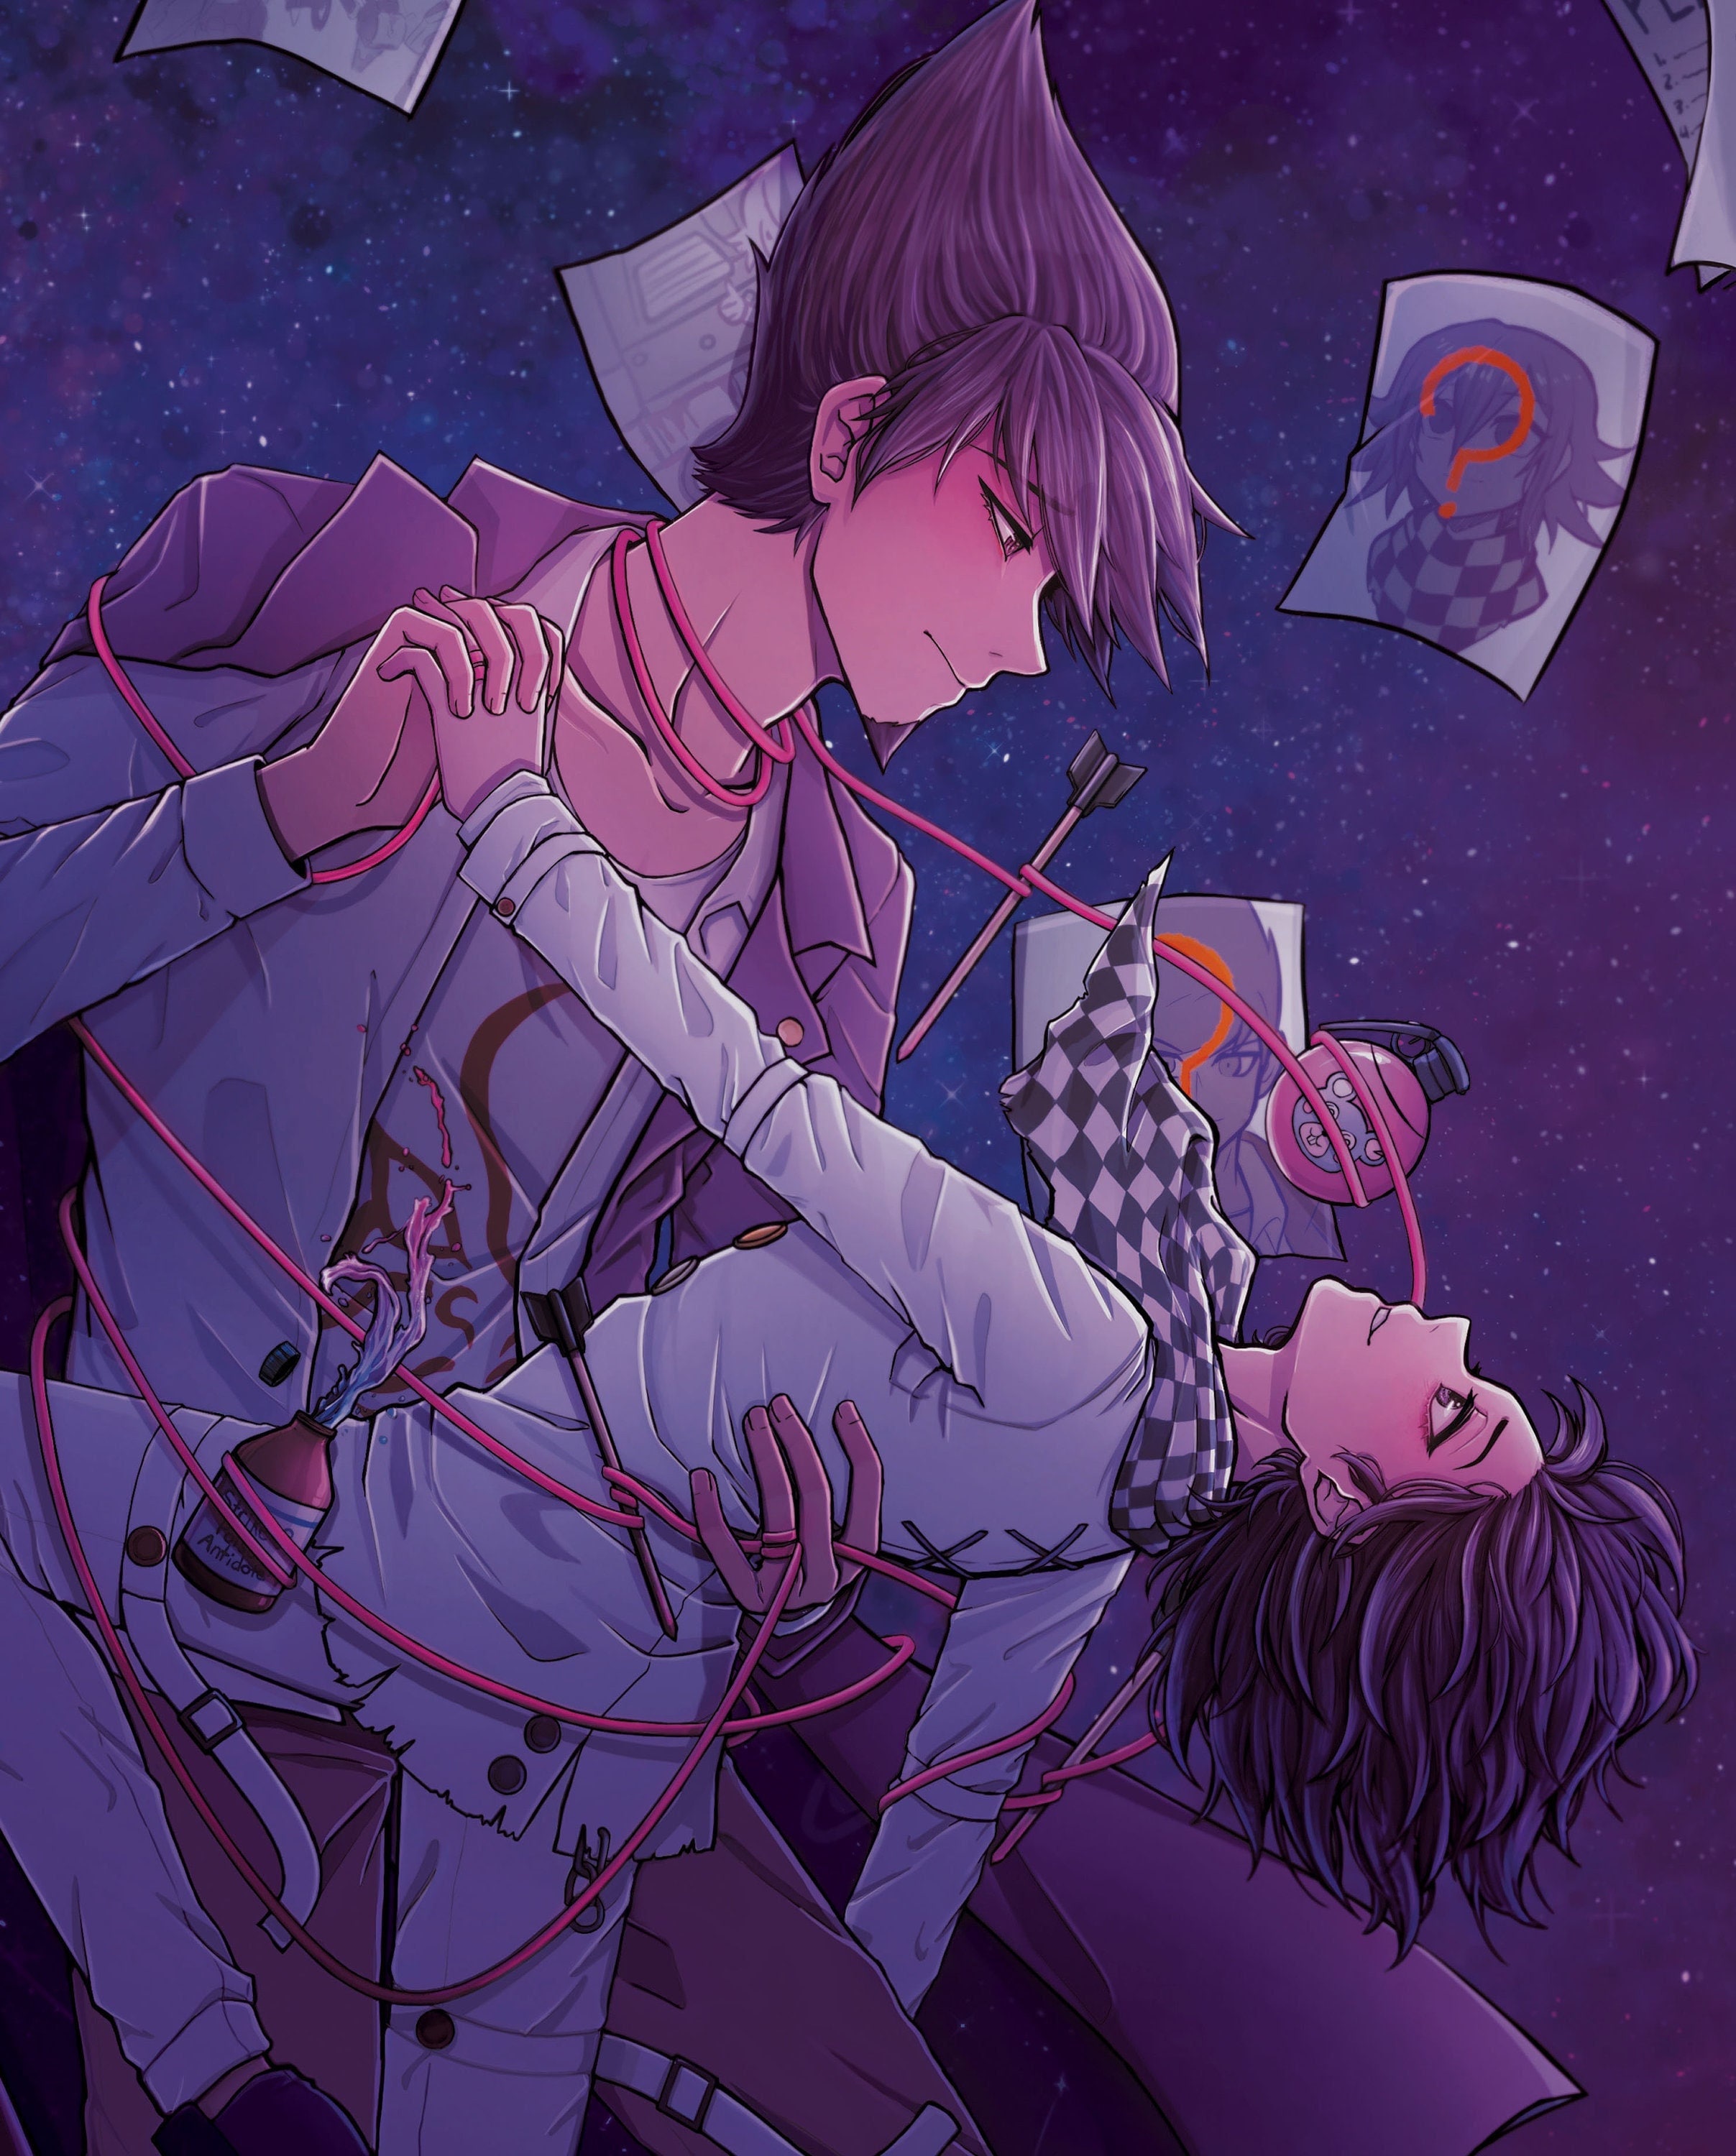 Super DANGANRONPA Anime Manga Kissen Sitzkissen Beidzeitig nur